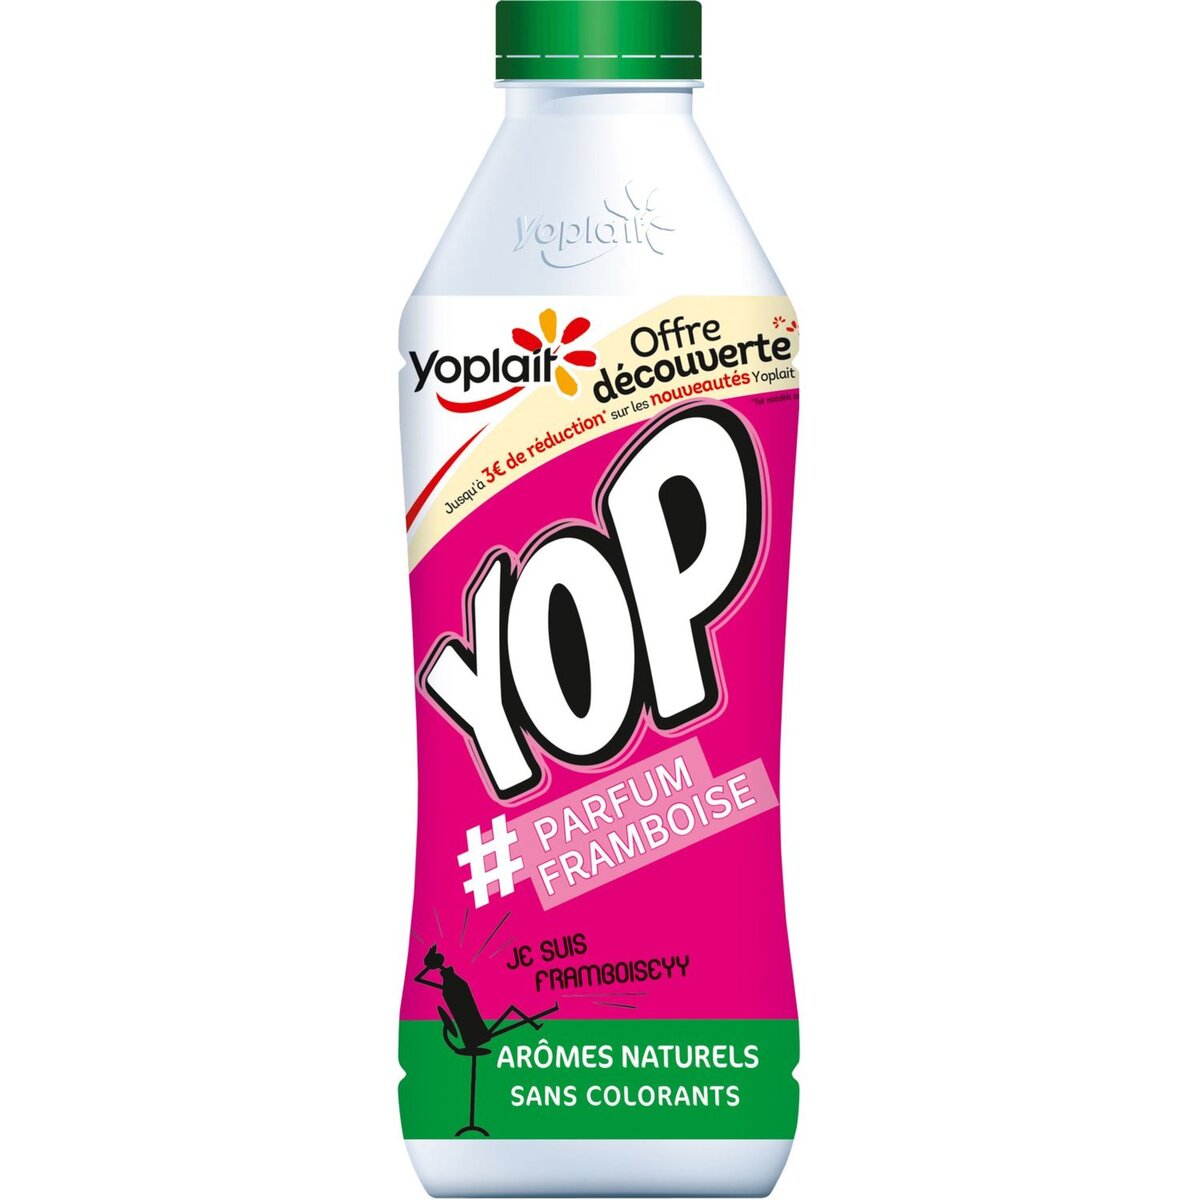 YOP Yop framboise 850g offre découverte